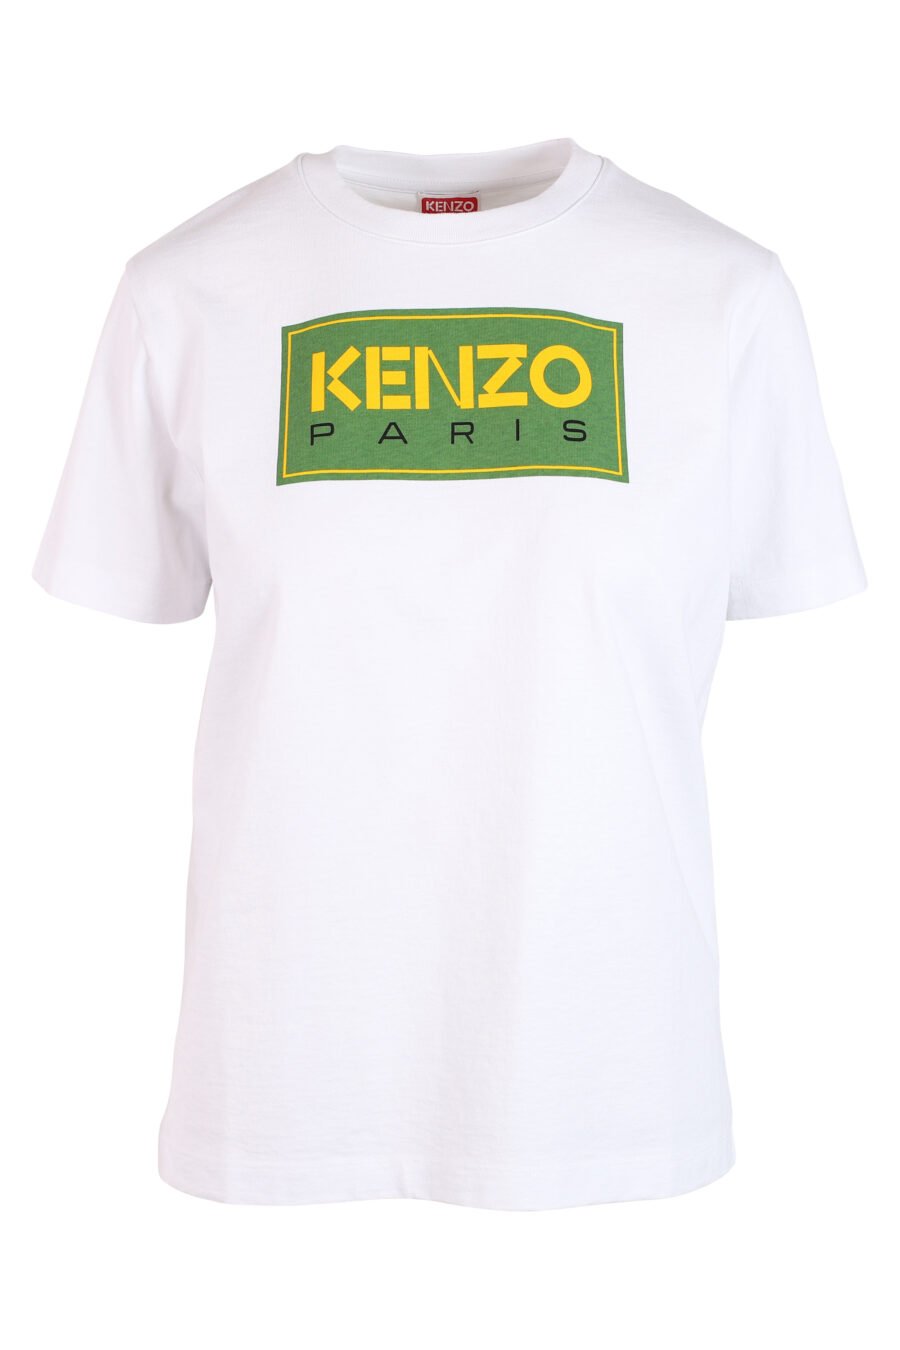 Weißes T-Shirt mit grünem Maxilogo "paris" - IMG 3268